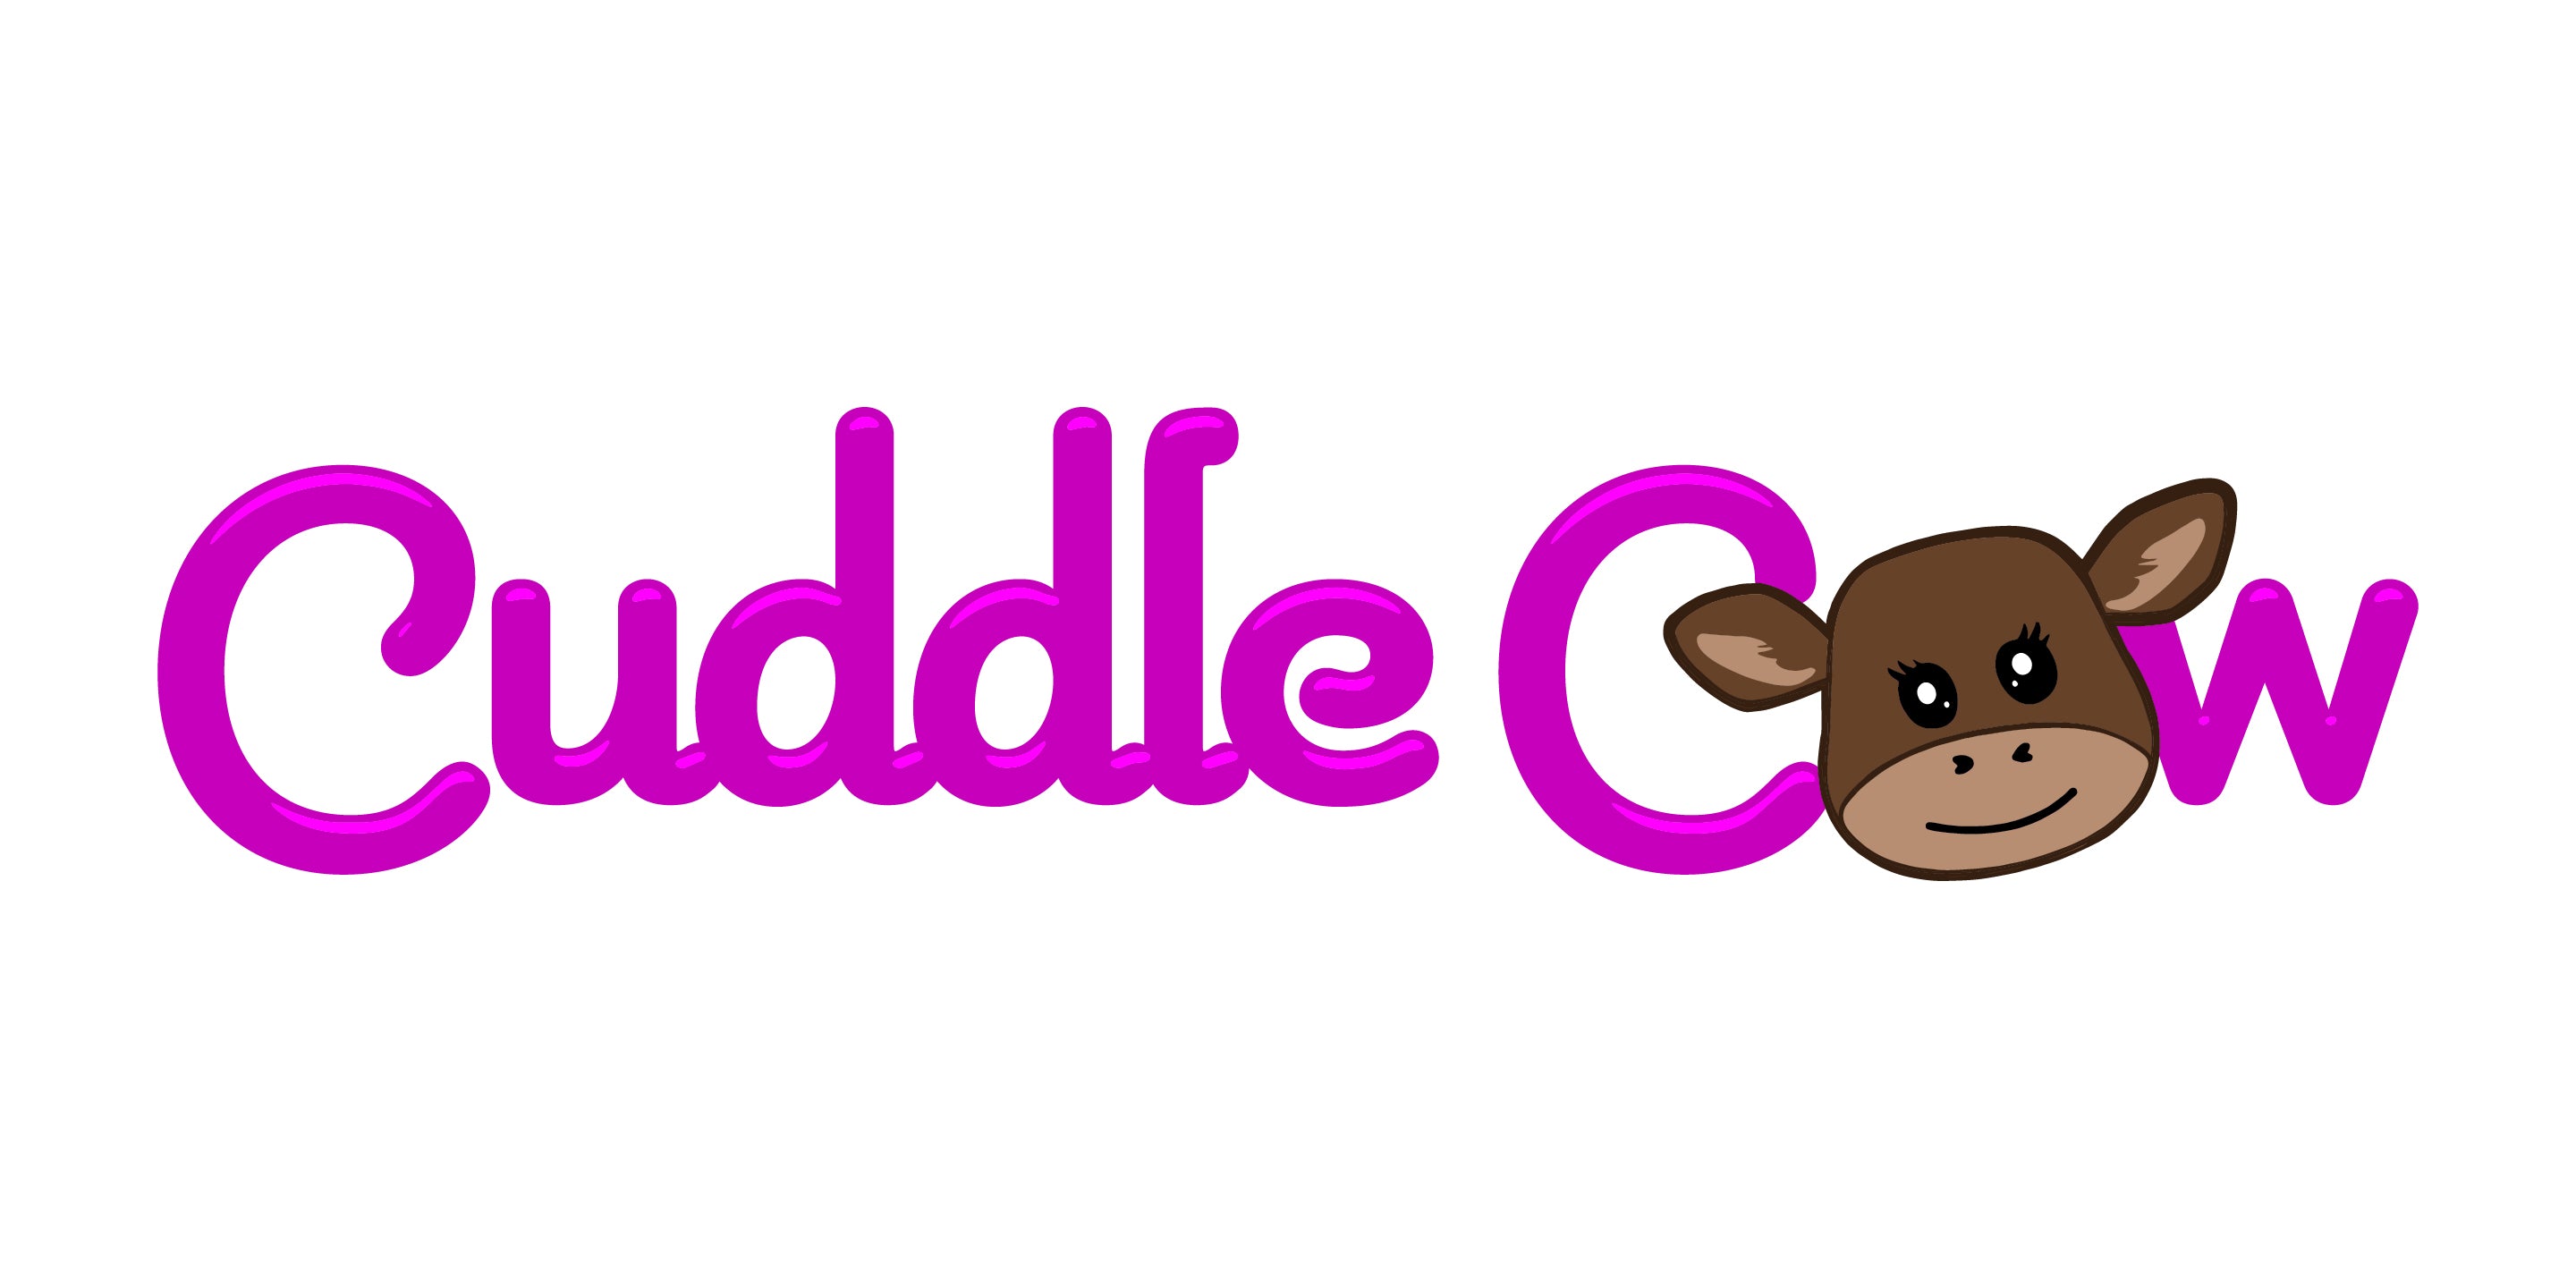 Follow CuddleCowCompany T-shirt Your – Dreams